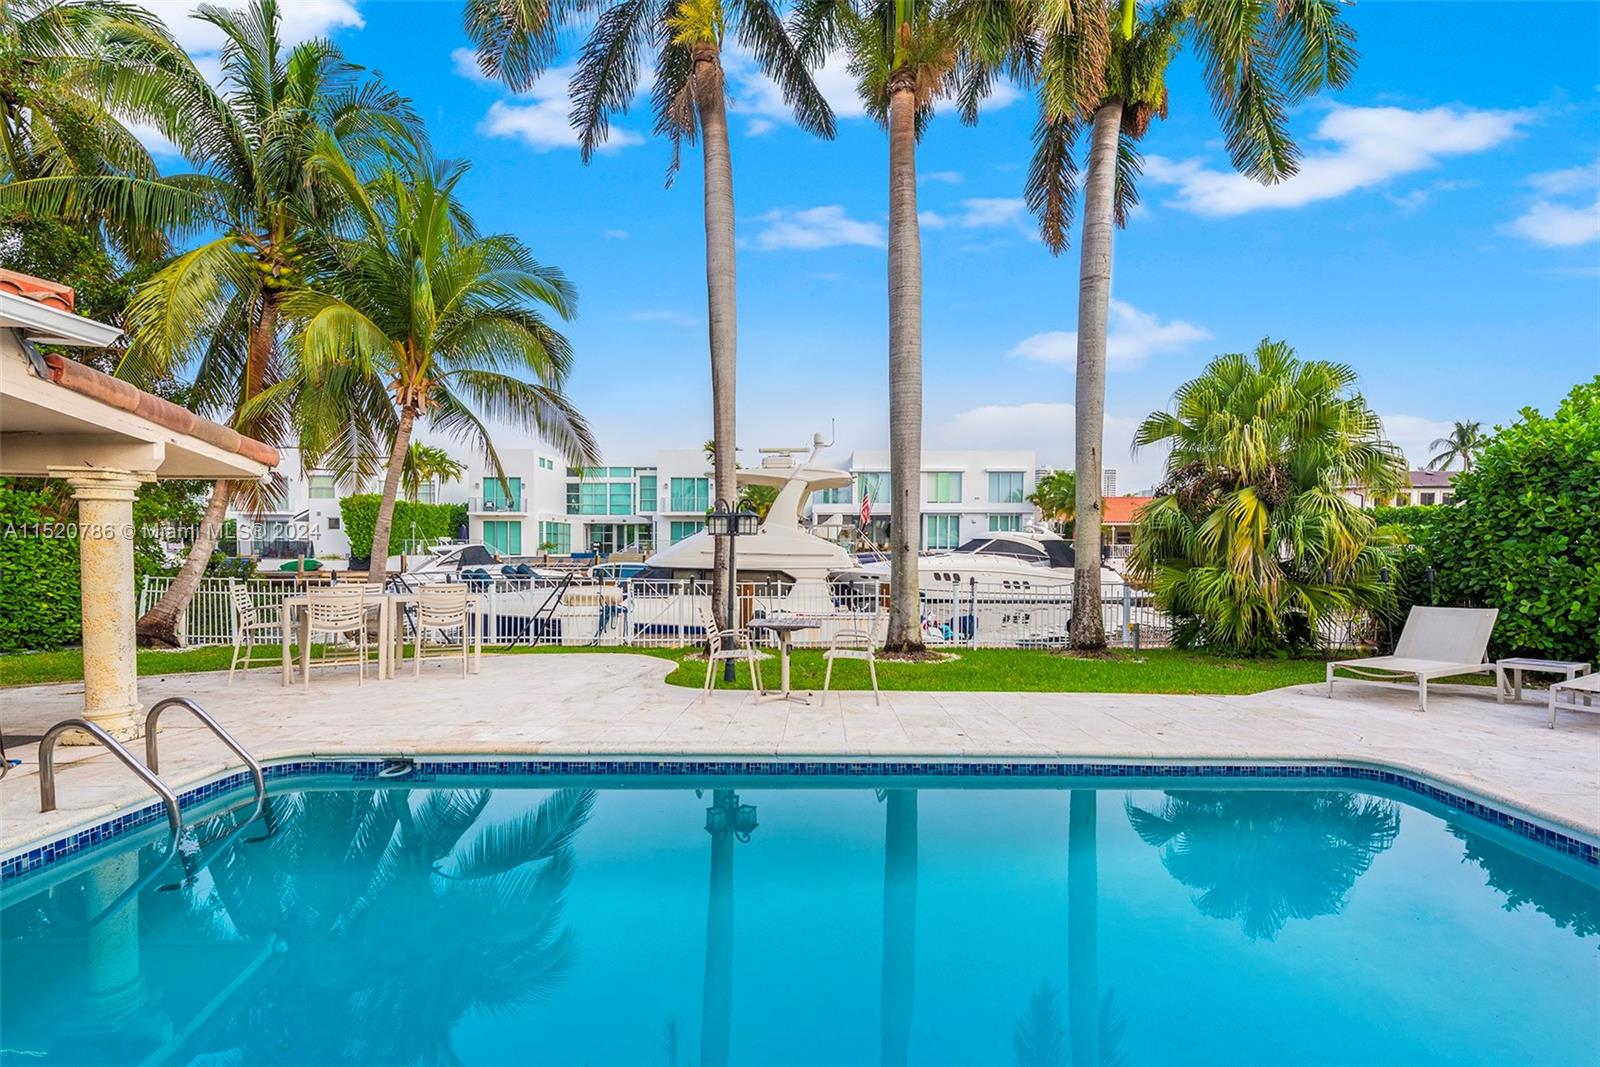 Property for Sale at 3241 Ne 165th St, North Miami Beach, Miami-Dade County, Florida - Bedrooms: 4 
Bathrooms: 4  - $2,800,000